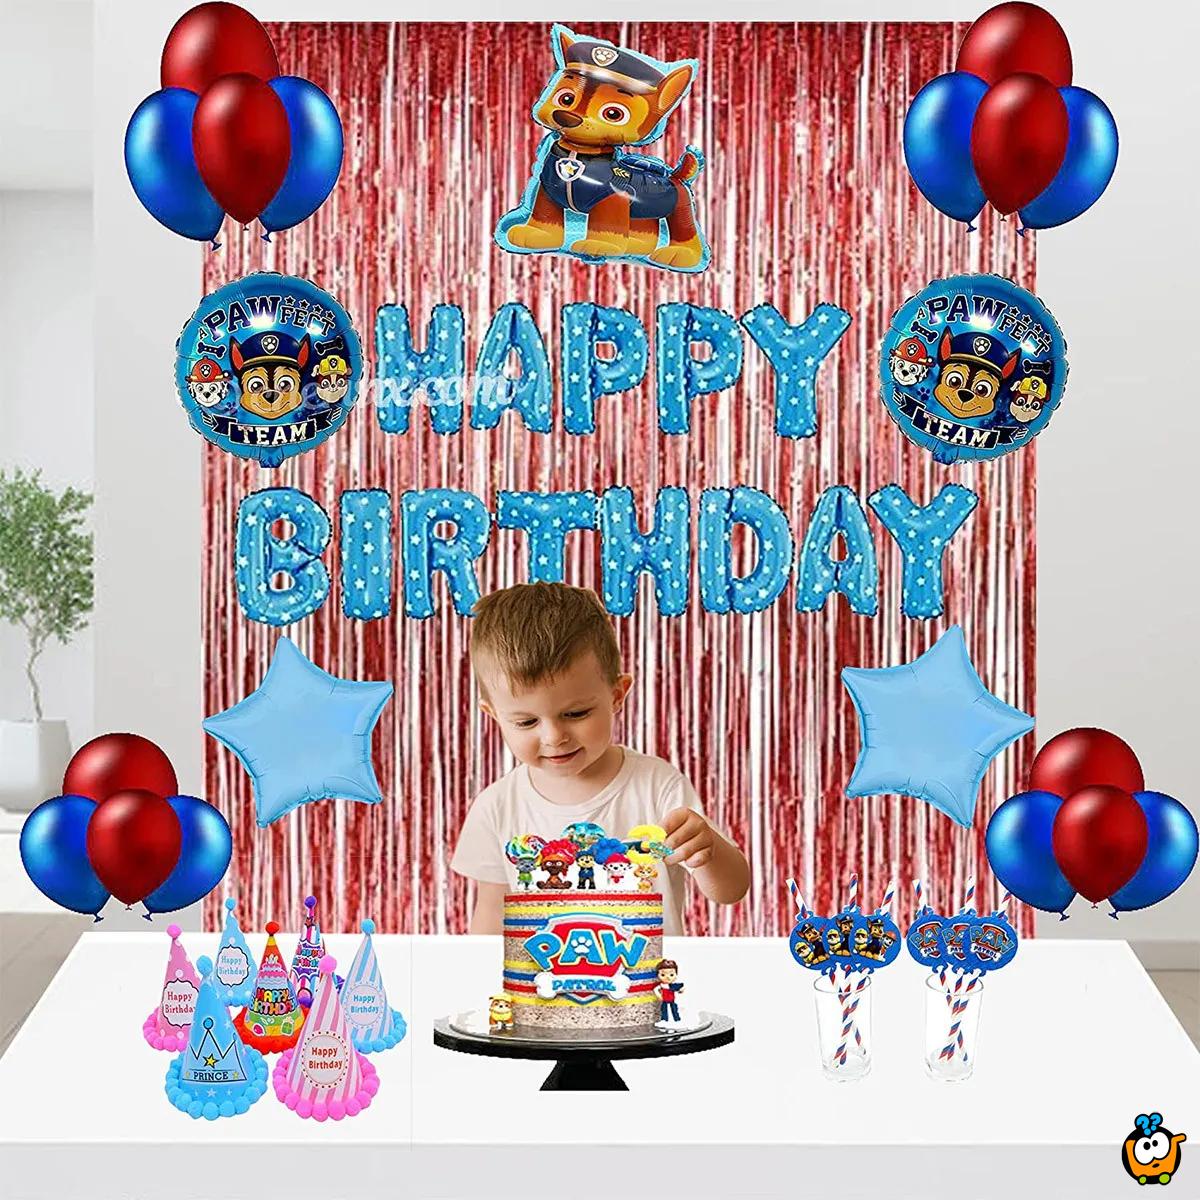 Patrolne Šape balon za dečije rođendane i proslave - Skaj